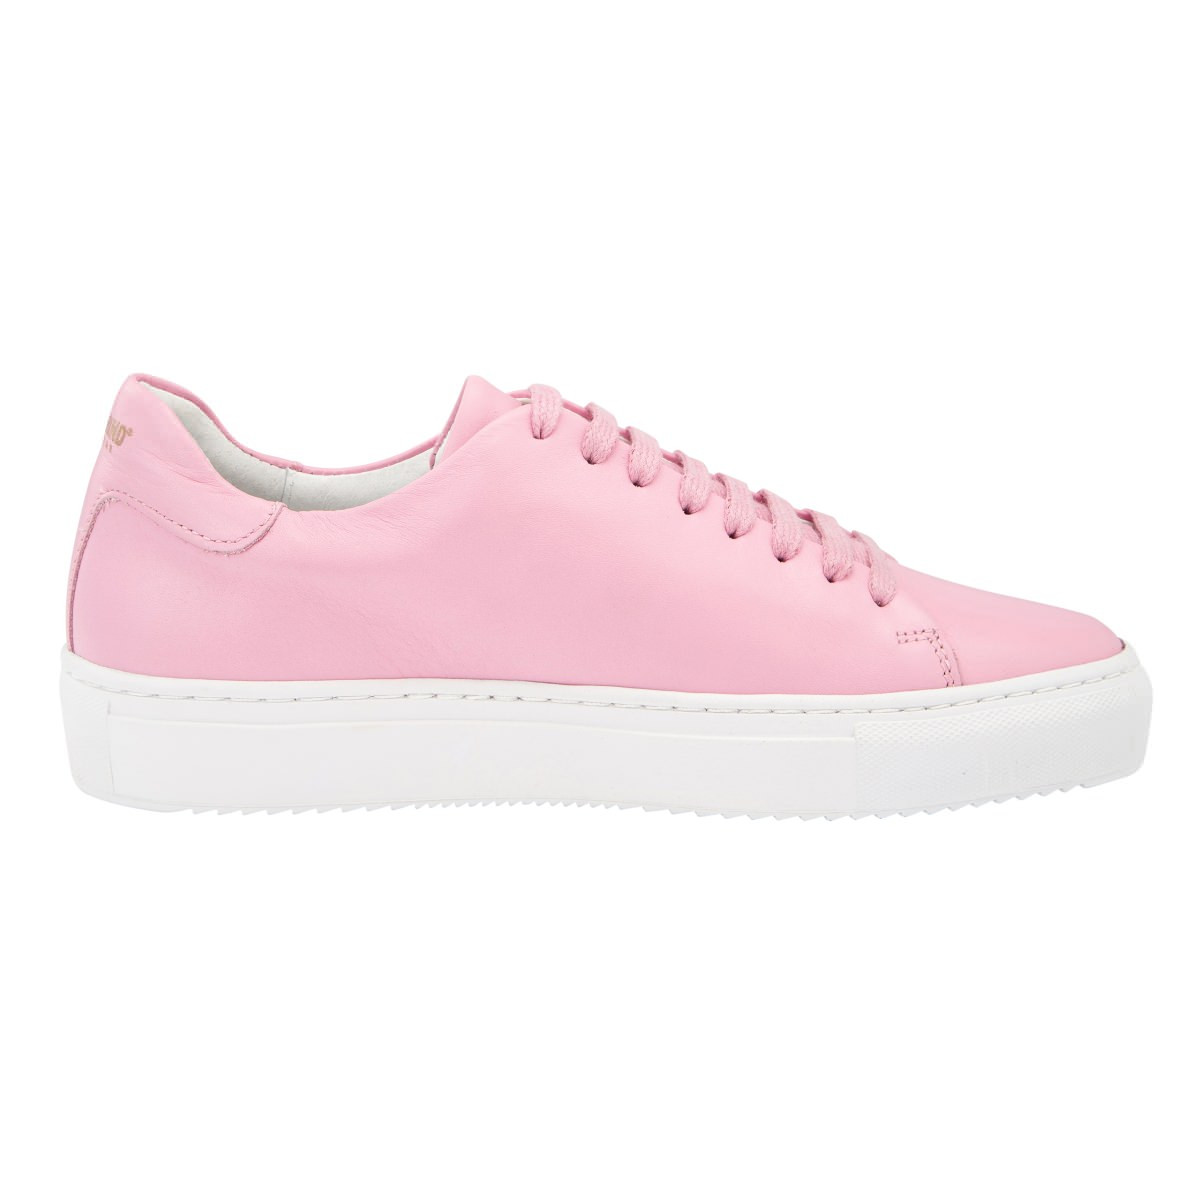 Suedwind-Ashton-Leather-Leder-Sneaker-Schuhe-Boots-Pink-10170027-06_1280x1280